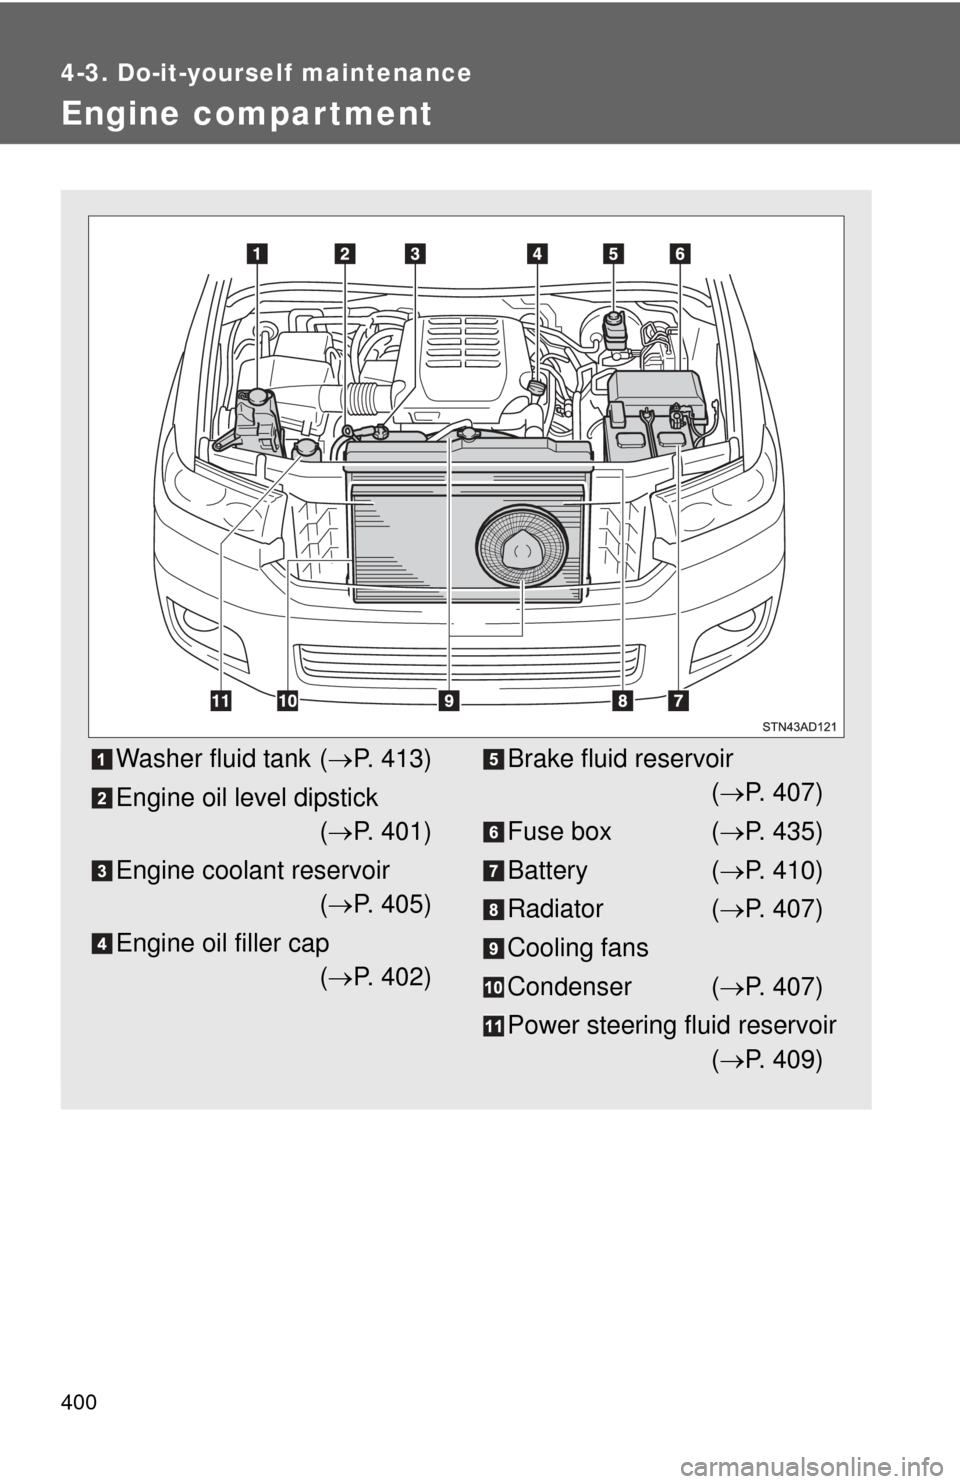 TOYOTA SEQUOIA 2016 2.G Owners Manual 400
4-3. Do-it-yourself maintenance
Engine compar tment
Washer fluid tank (P. 413)
Engine oil level dipstick ( P. 401)
Engine coolant reservoir ( P. 405)
Engine oil filler cap ( P. 402)Bra